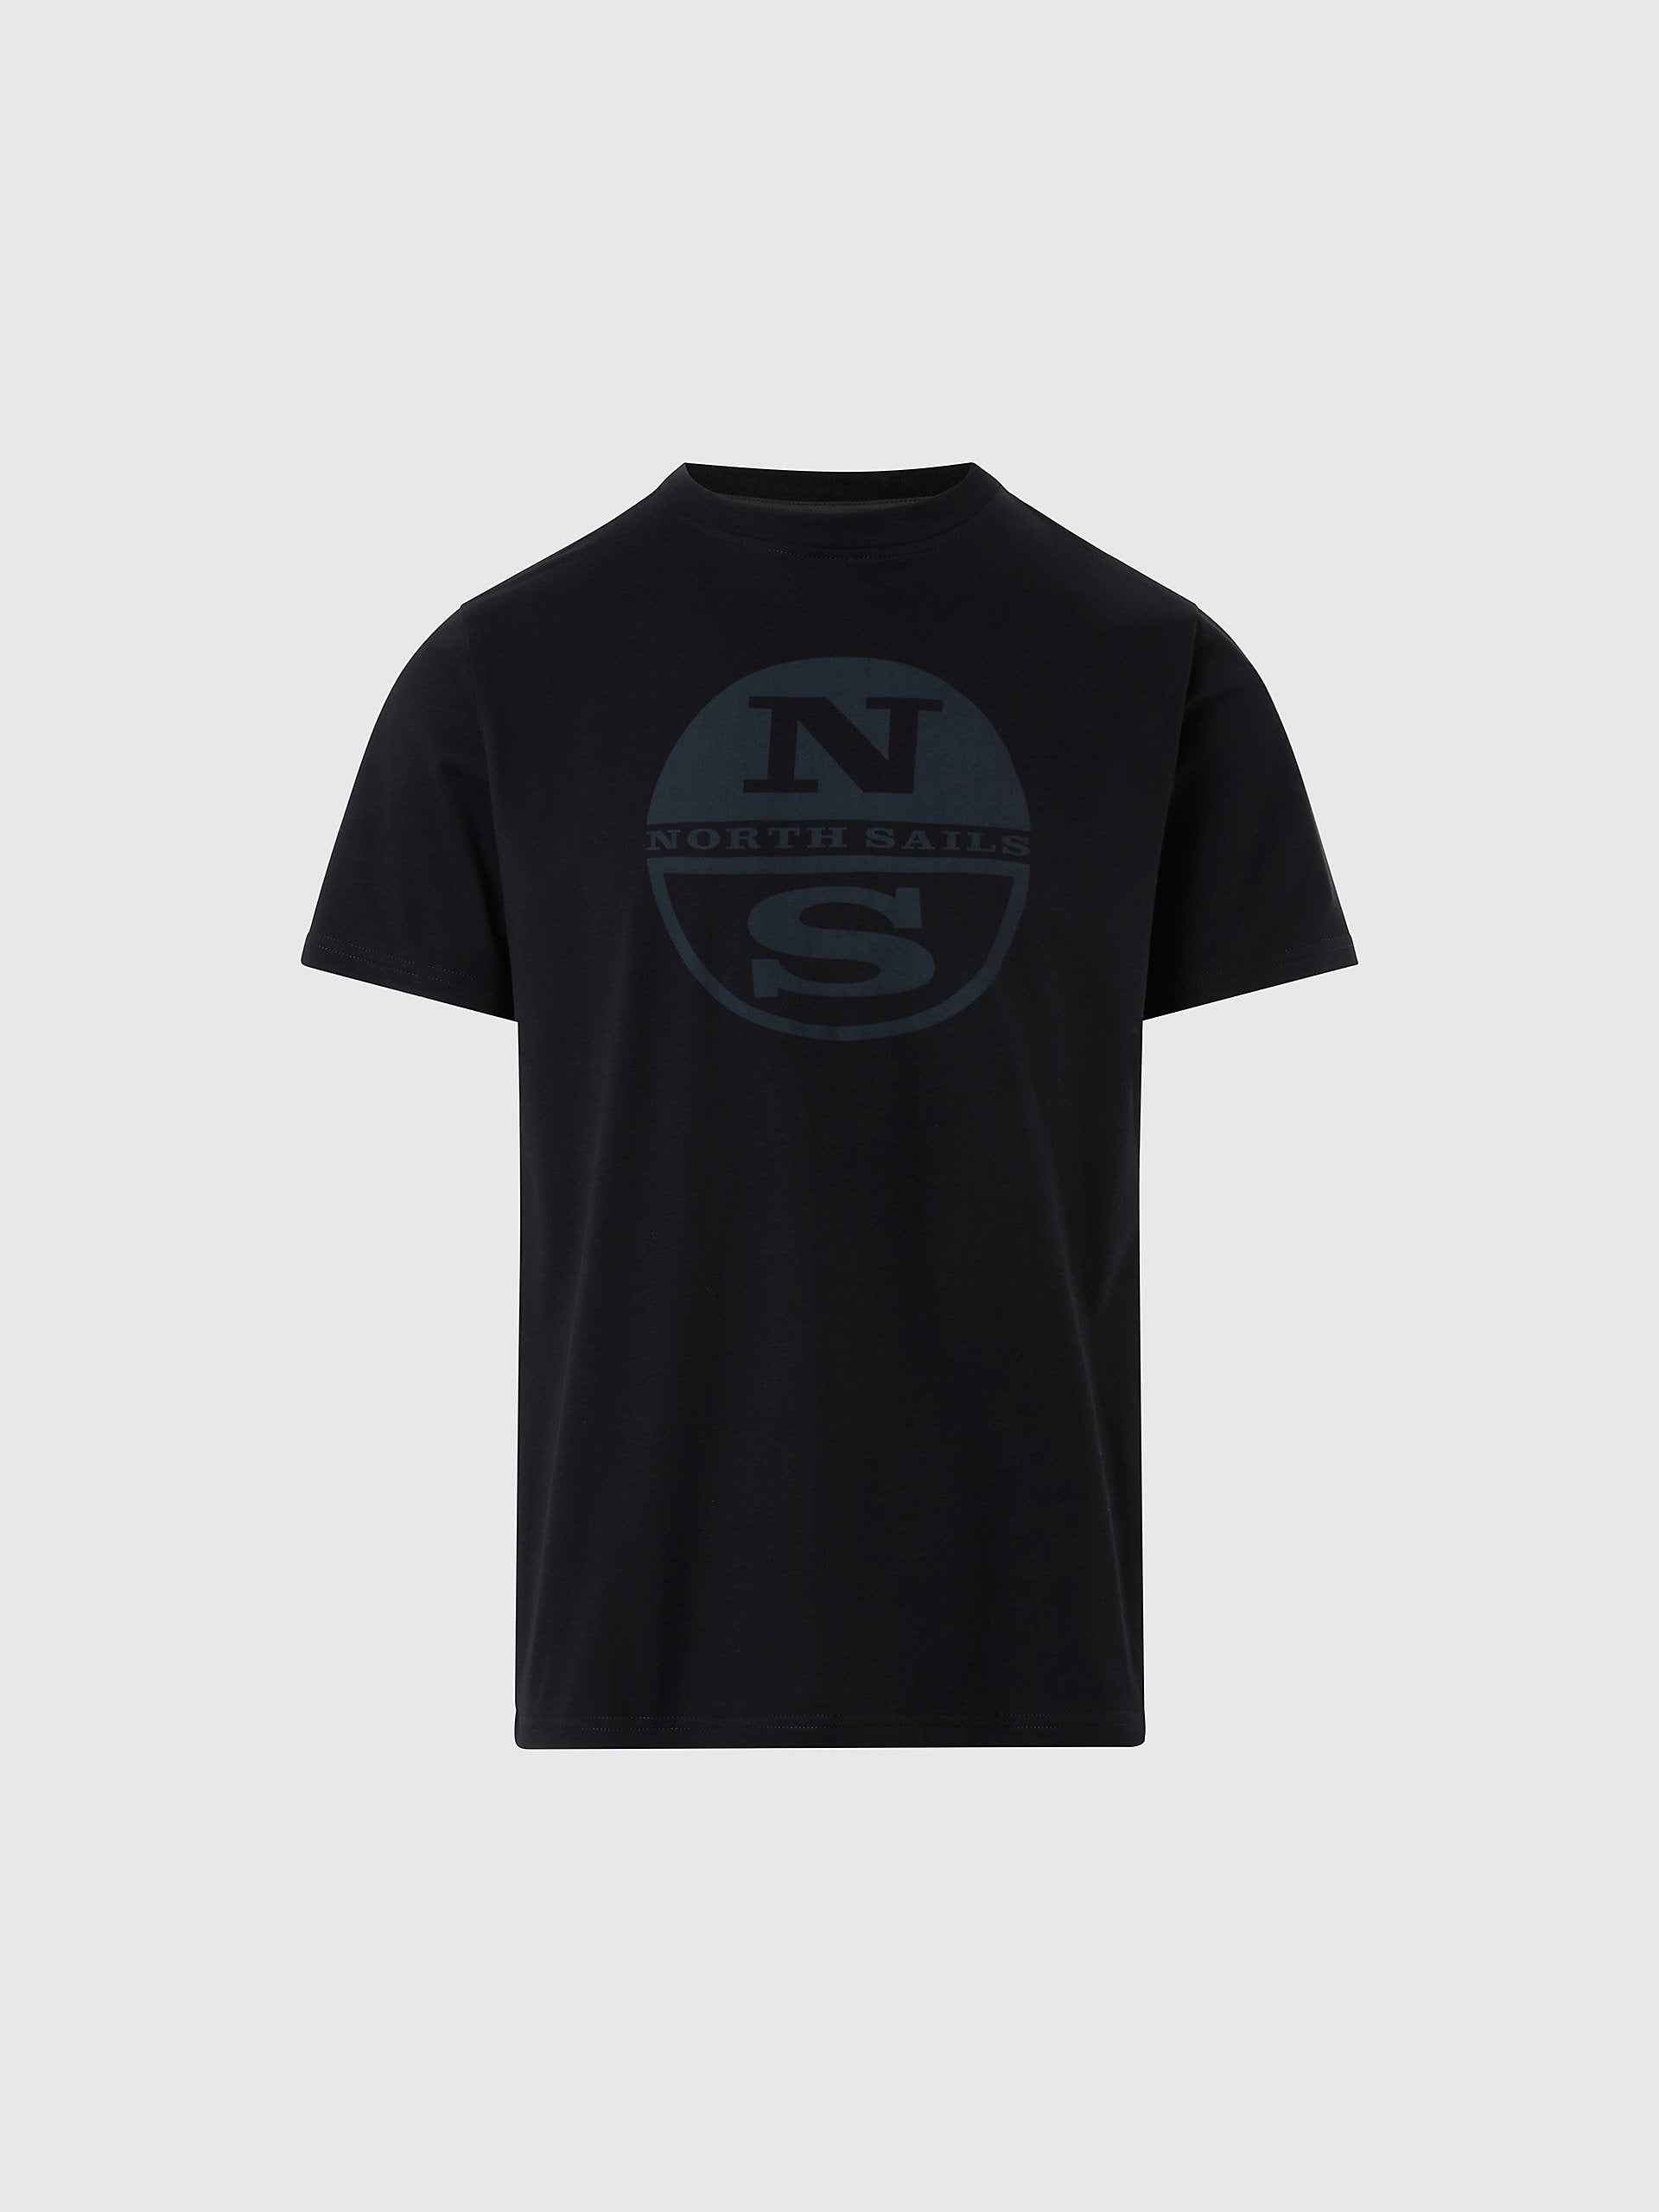 North Sails - T-shirt with logo printNorth SailsBlackM